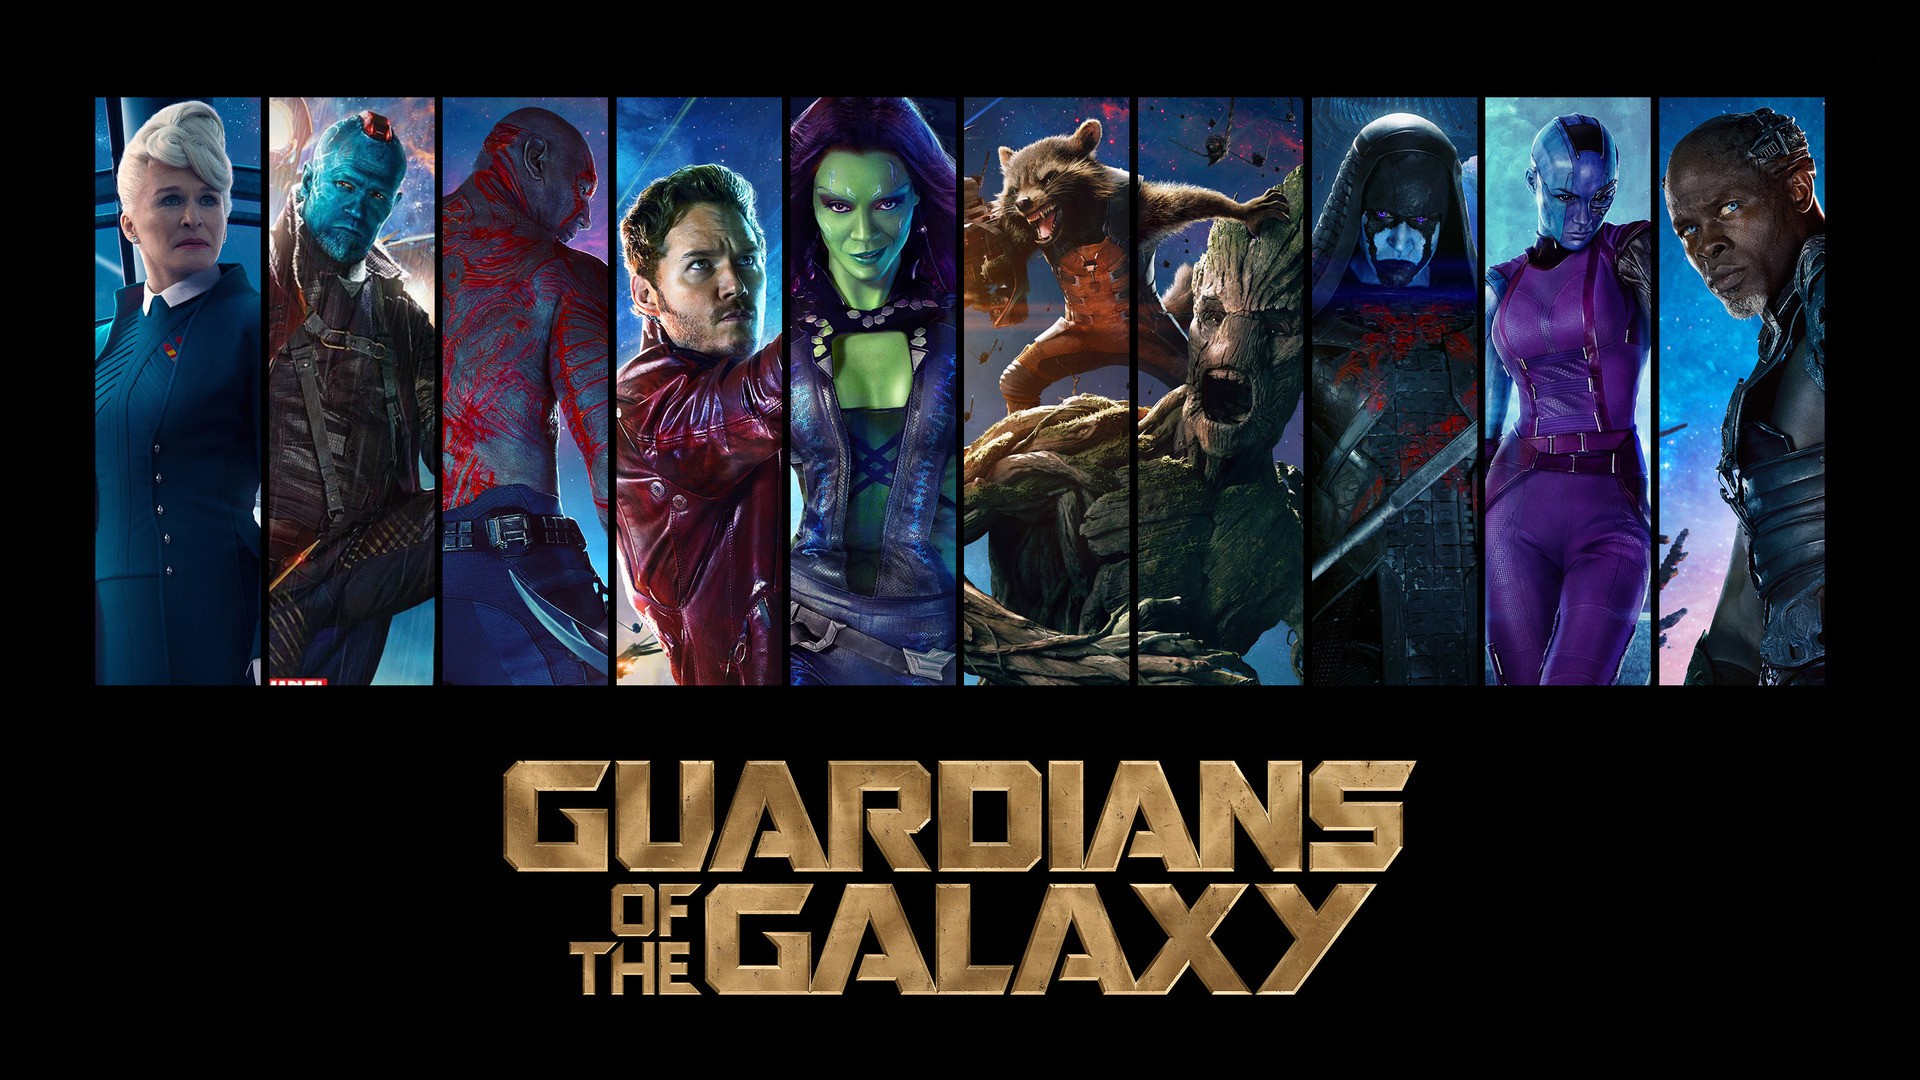 gurdians of the galaxy laptop wallpaper